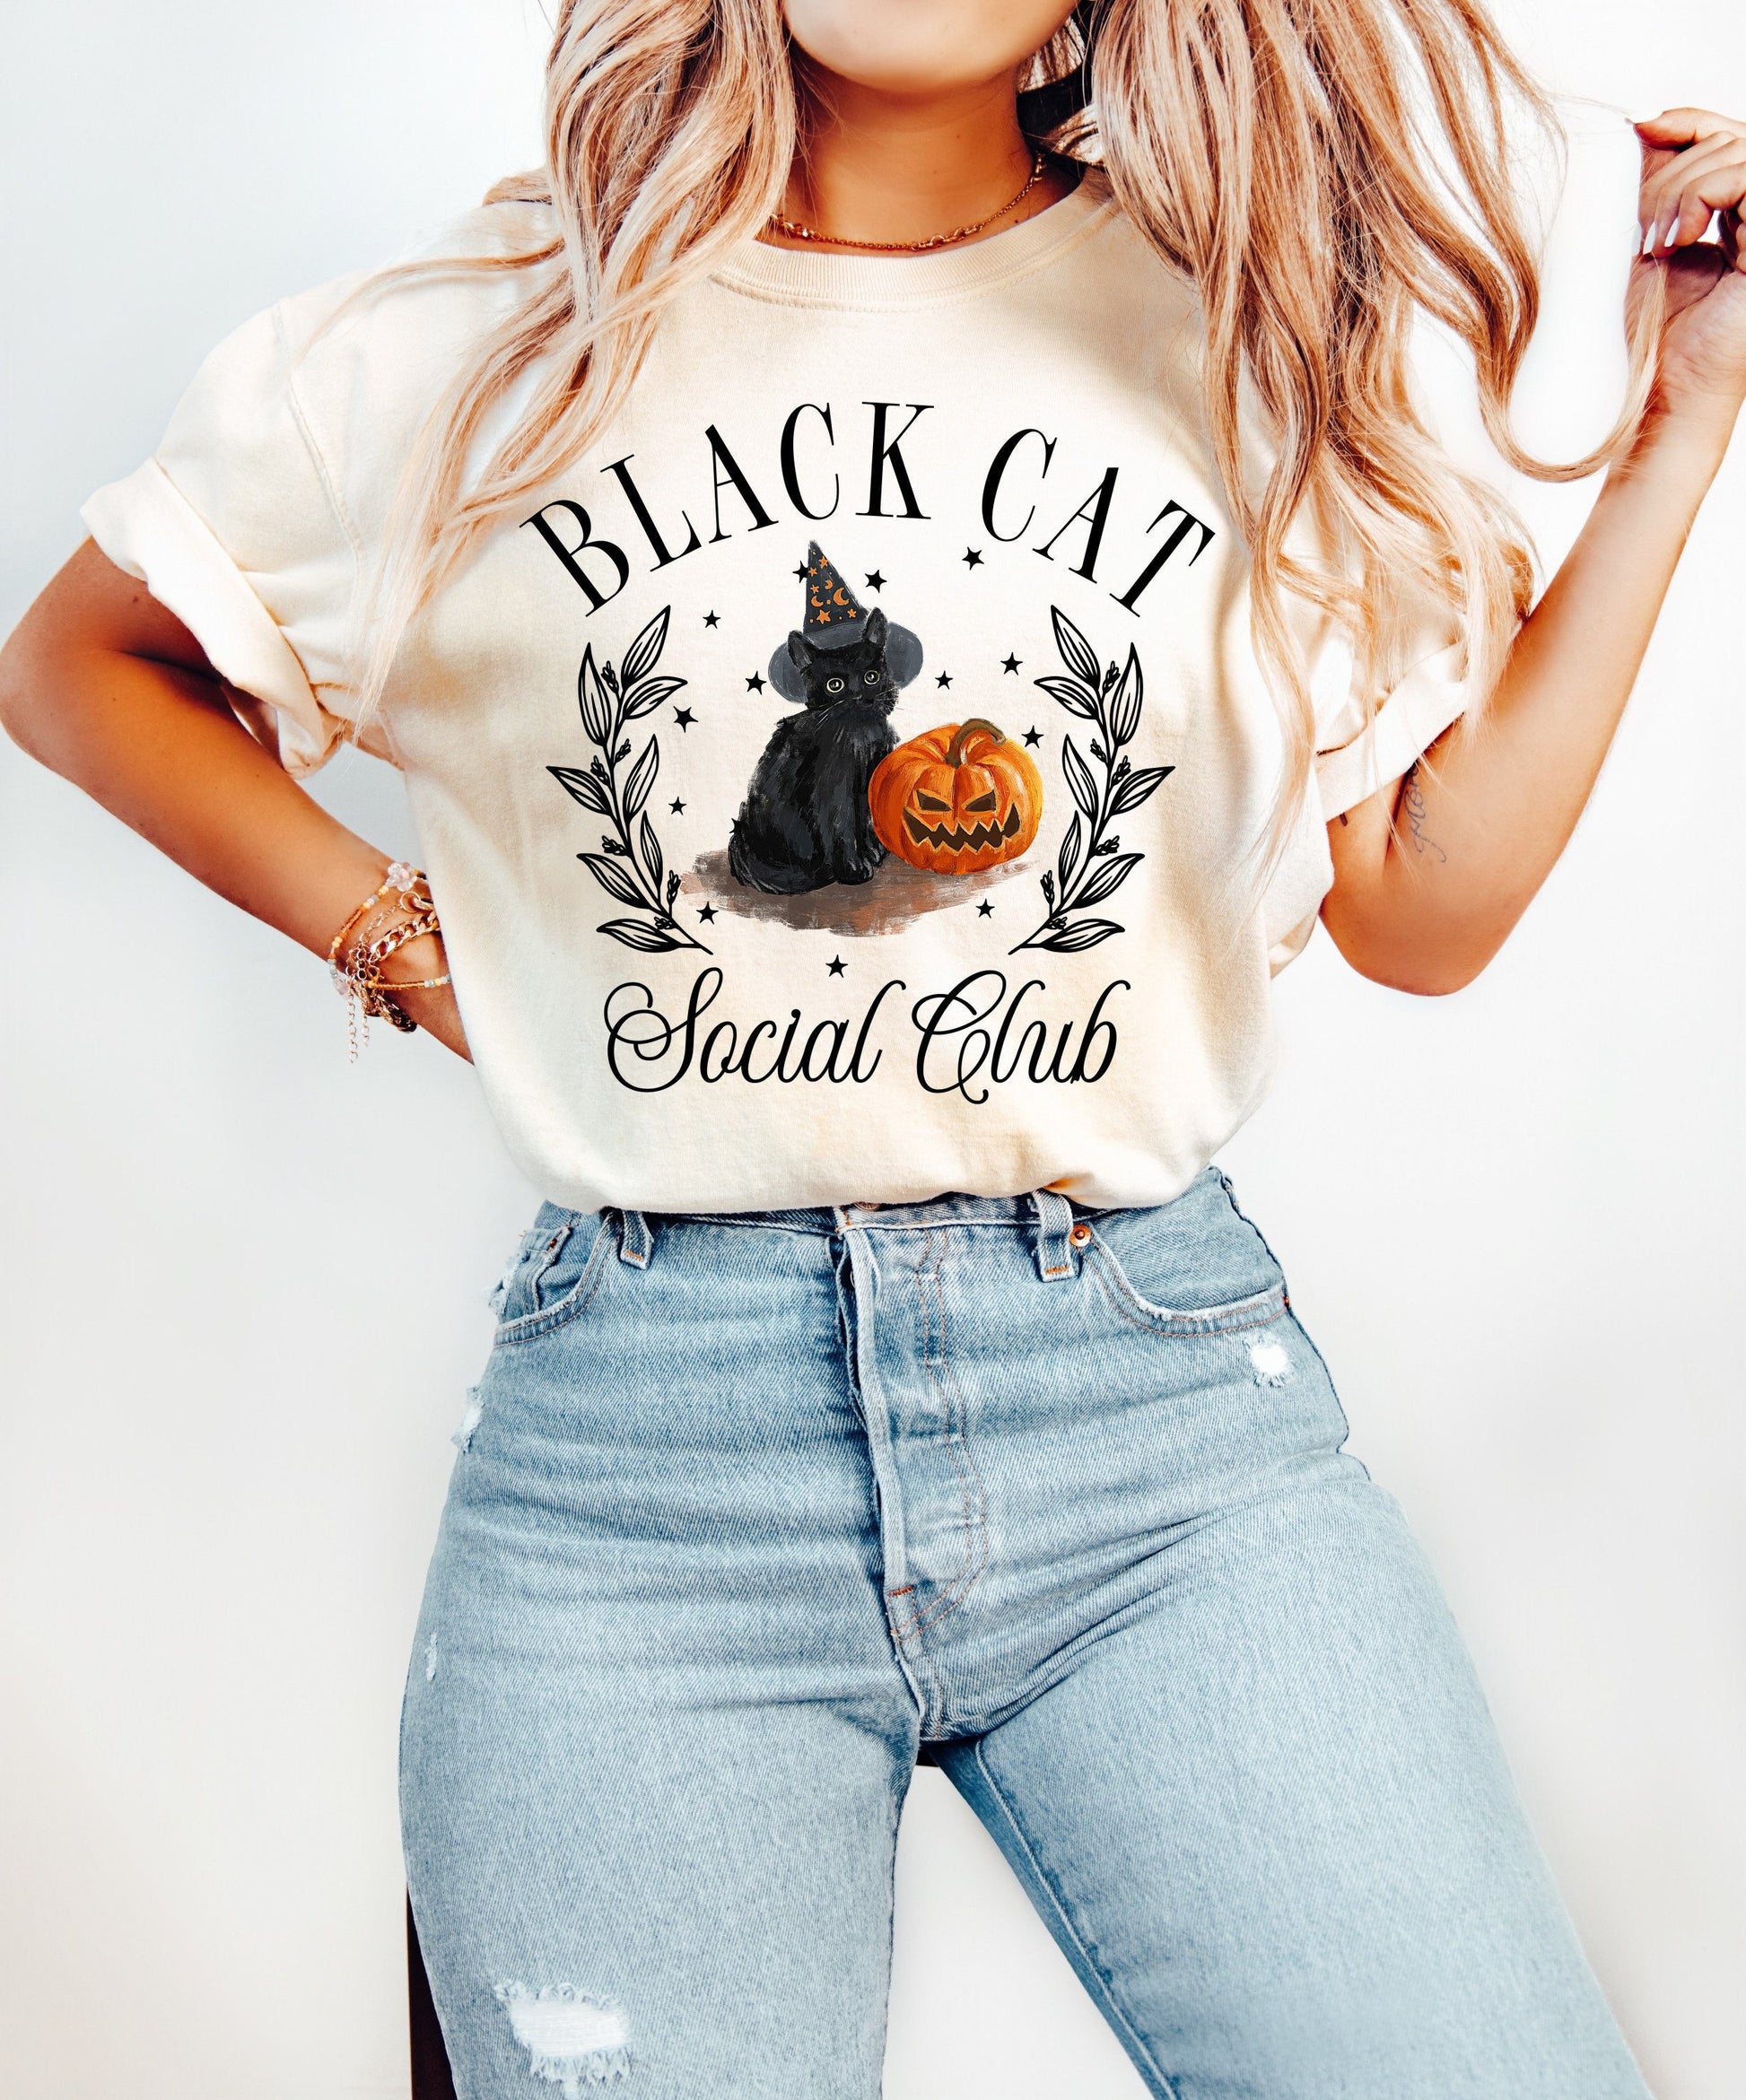 Cute Pumpkin Black Cat Social Club Halloween Shirt, Cute Witch Halloween Shirt, Halloween Shirts, Spooky Season Shirt, Witches Halloween Top